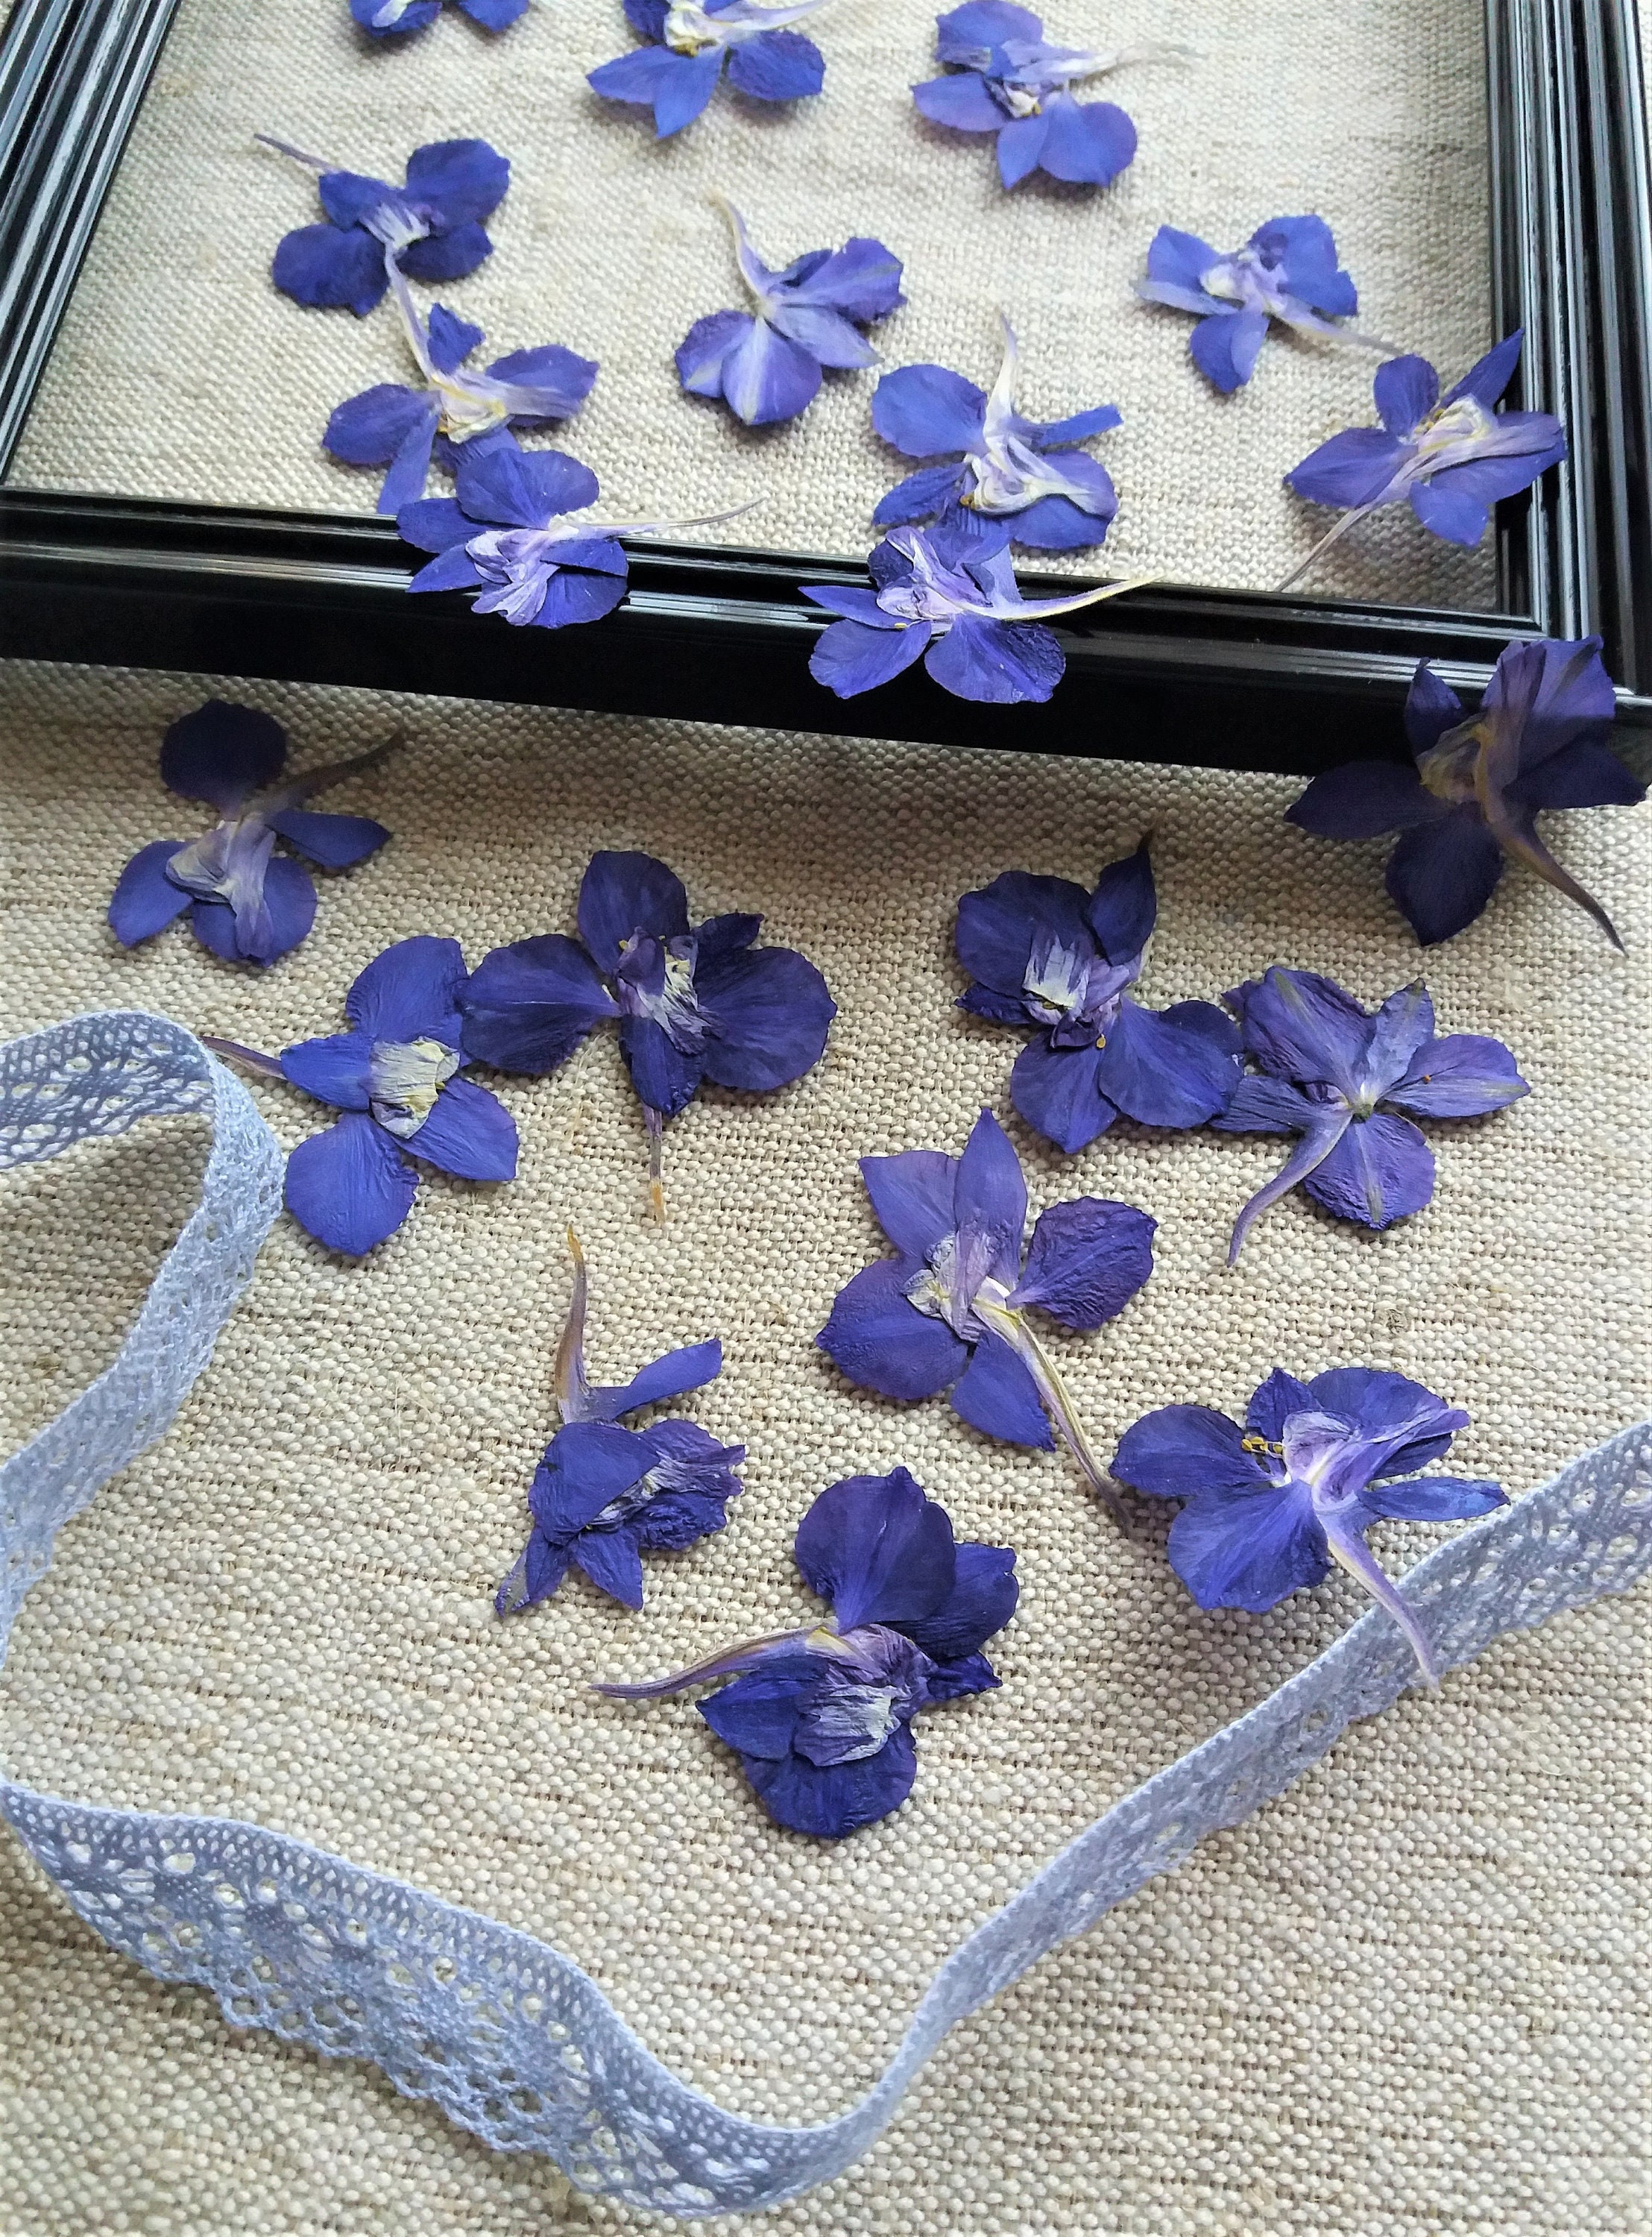 Pressed Blue Flower Set 10pcs, Dried Pressed Flower Mix, White Flower Set, Dried  Flowers for Crafts and Invitations, Card Making Flowers 